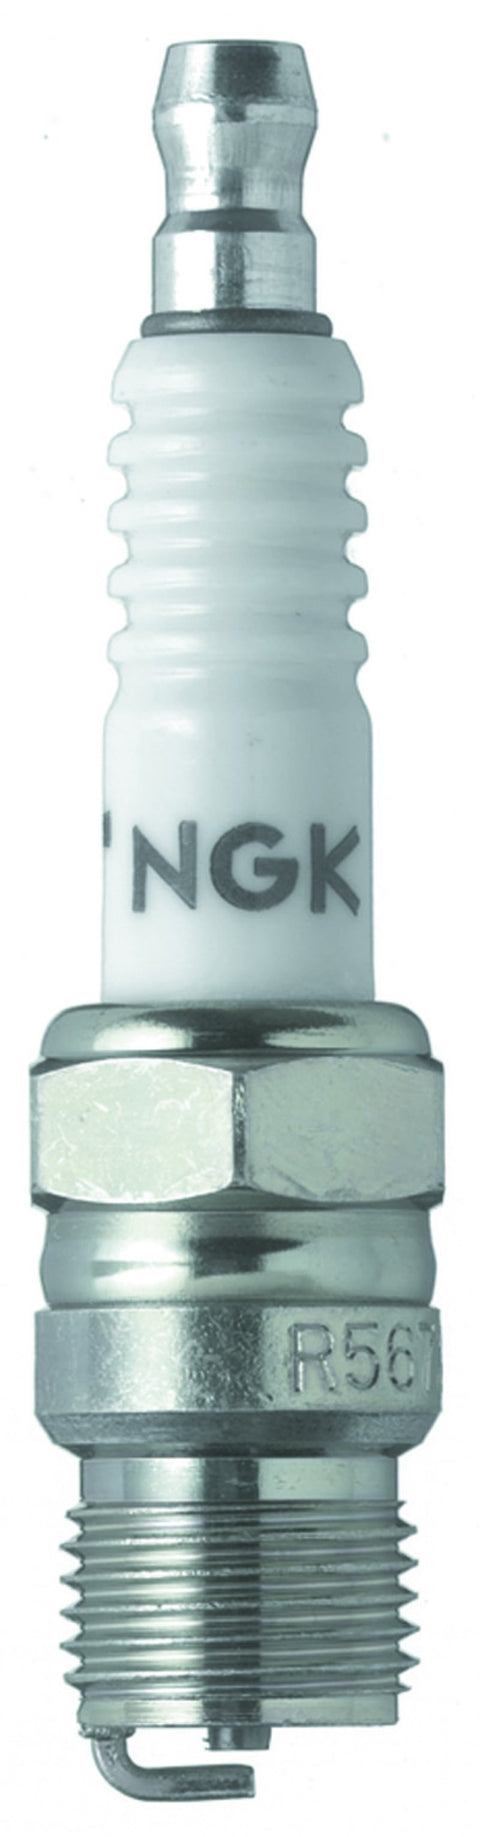 NGK Cooper Core Spark Plug Heat Range 8 Thread Size 14mm (3249-1)